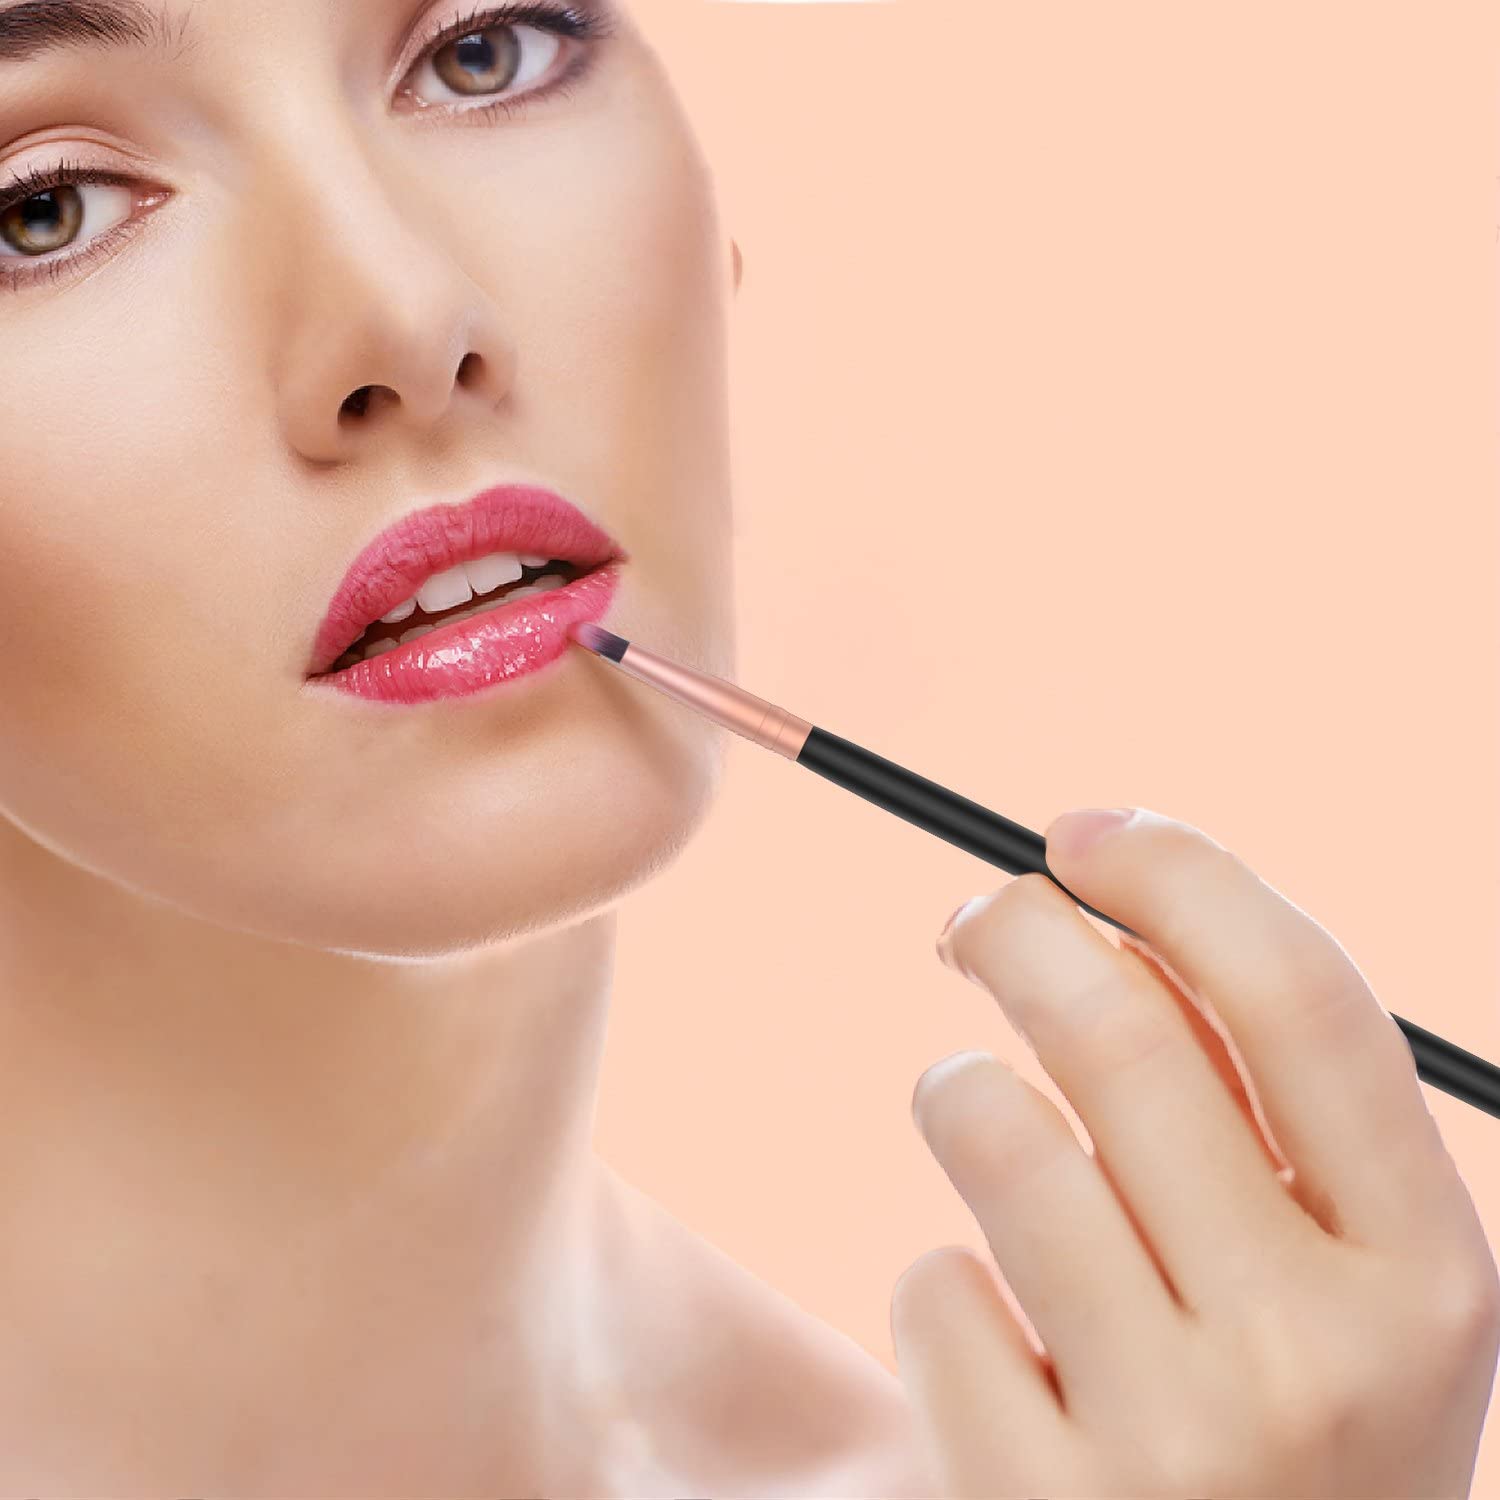 BESTOPE Makeup Brushes 18 PCs Makeup Brush Set. - e4cents